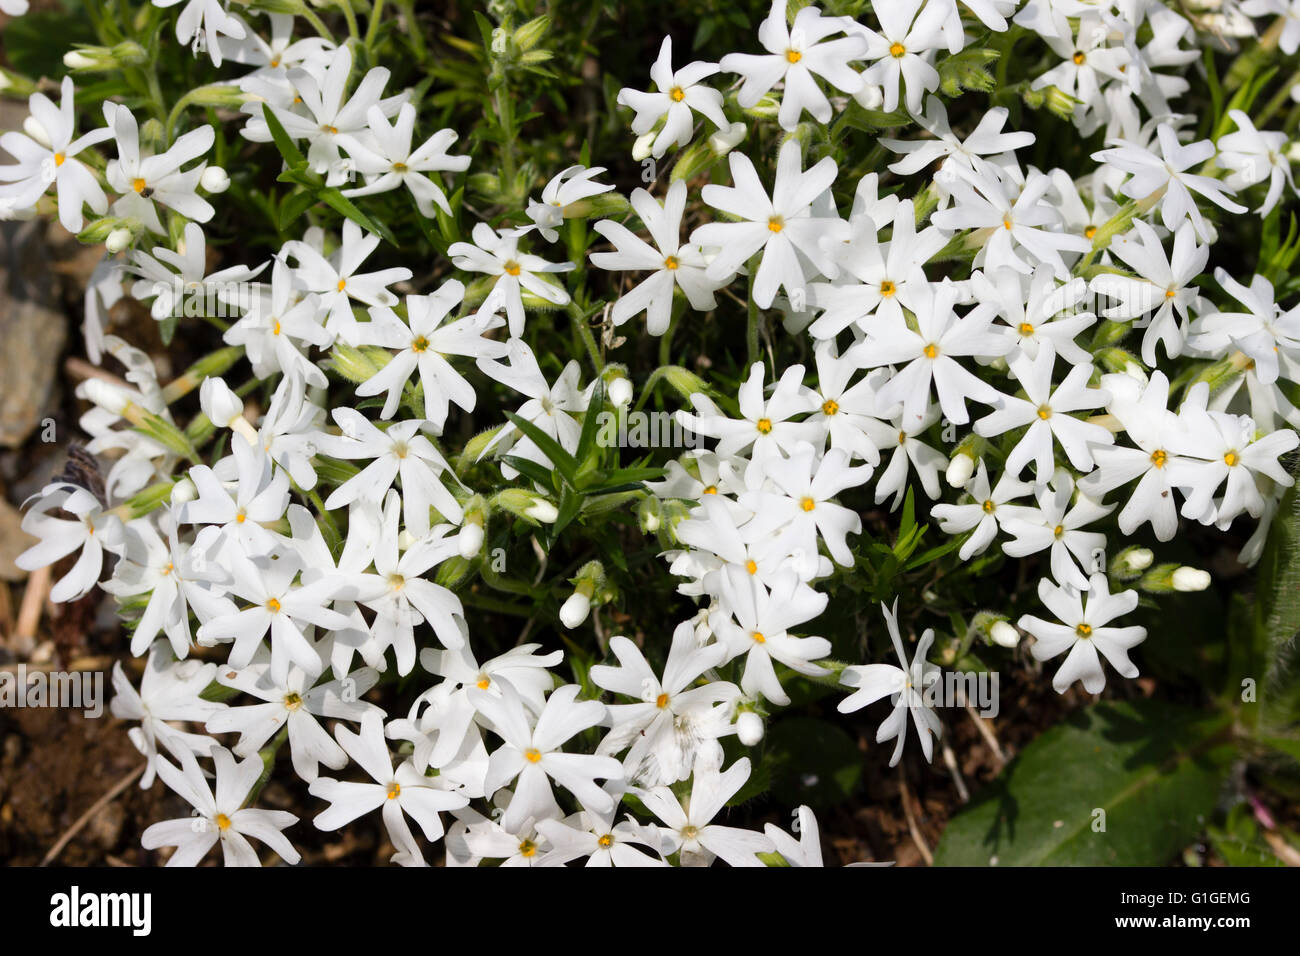 5 petalled white flowers adorn the creeping stems of the moss phlox, Phlox subulata 'Snowflake' Stock Photo